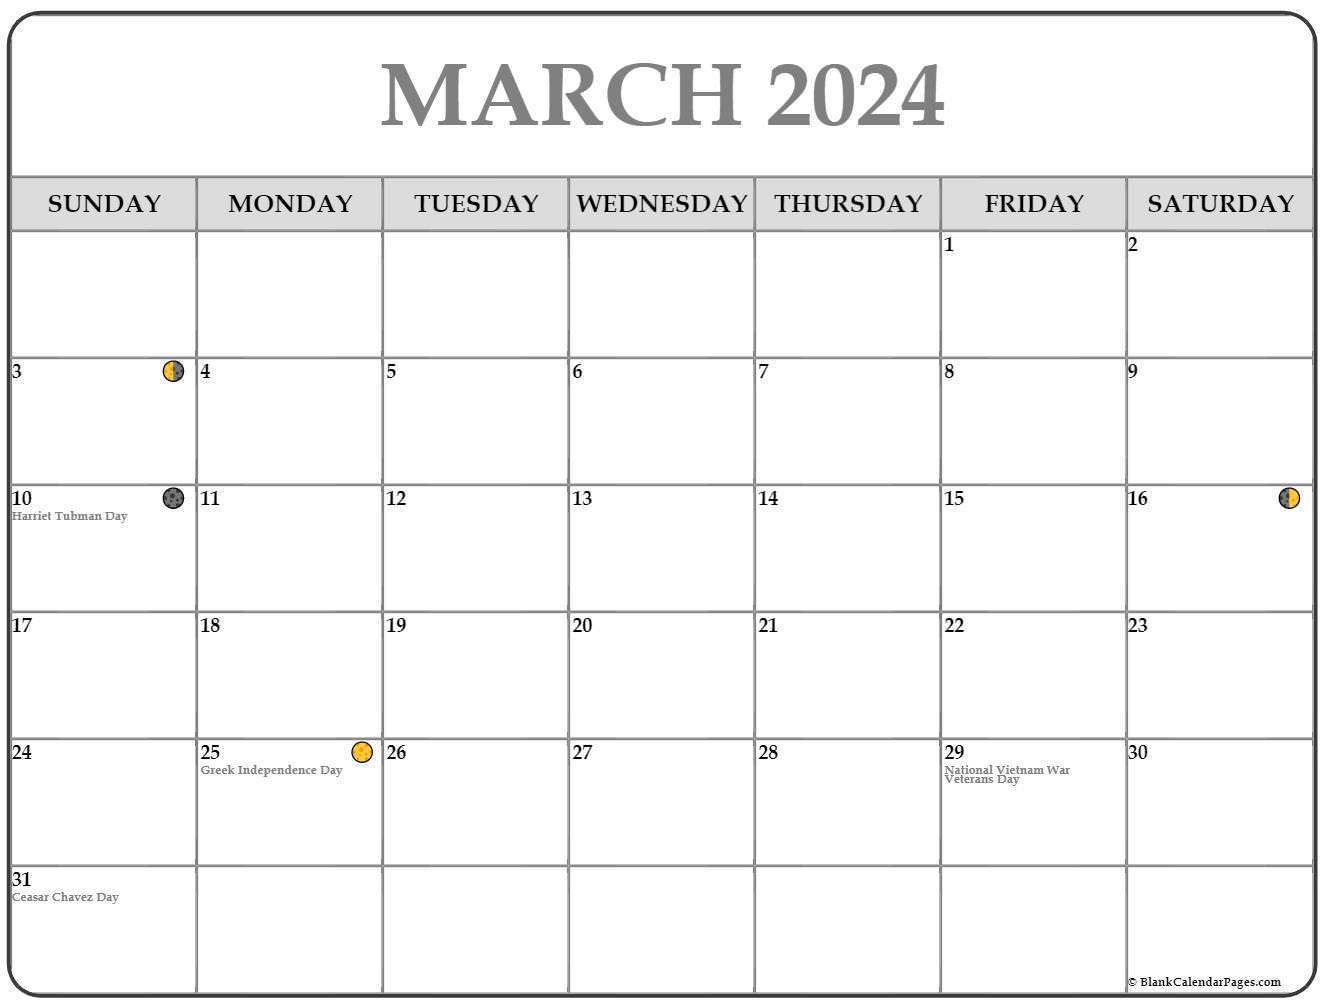 March 2024 Calendars Cool Amazing Incredible School Calendar Dates 2024